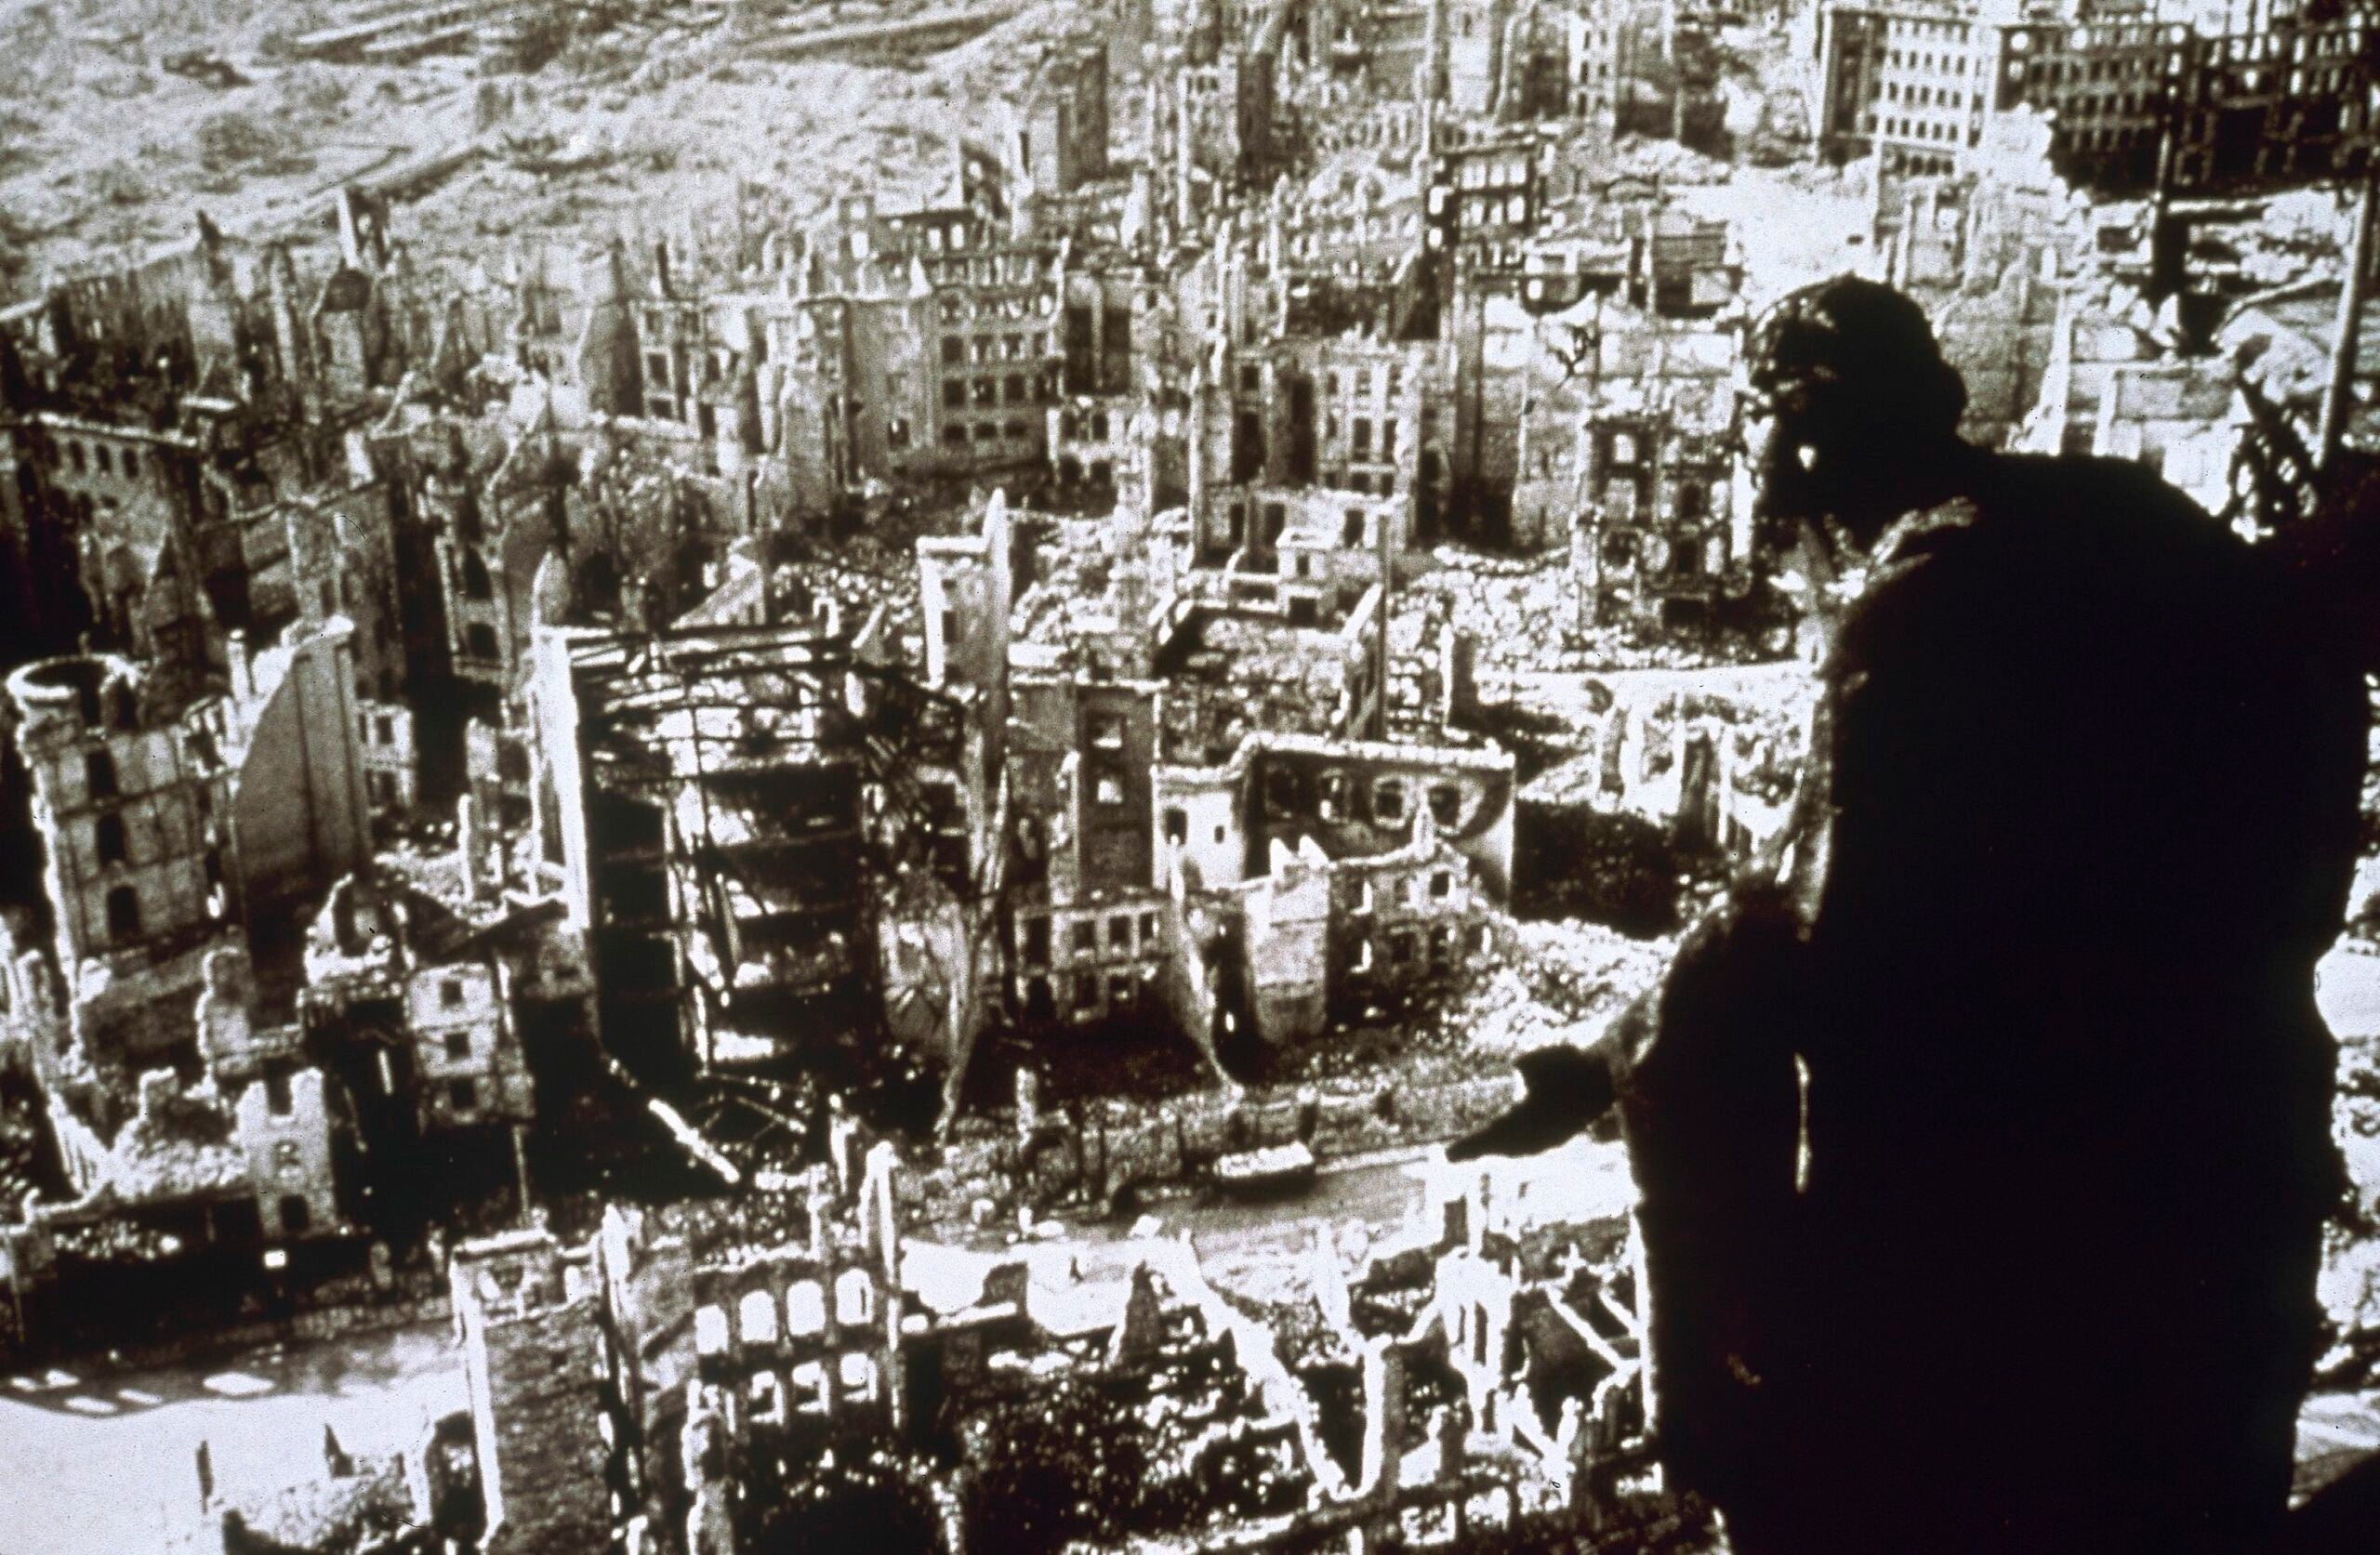 World War II. Dresden destroyed by bombing.